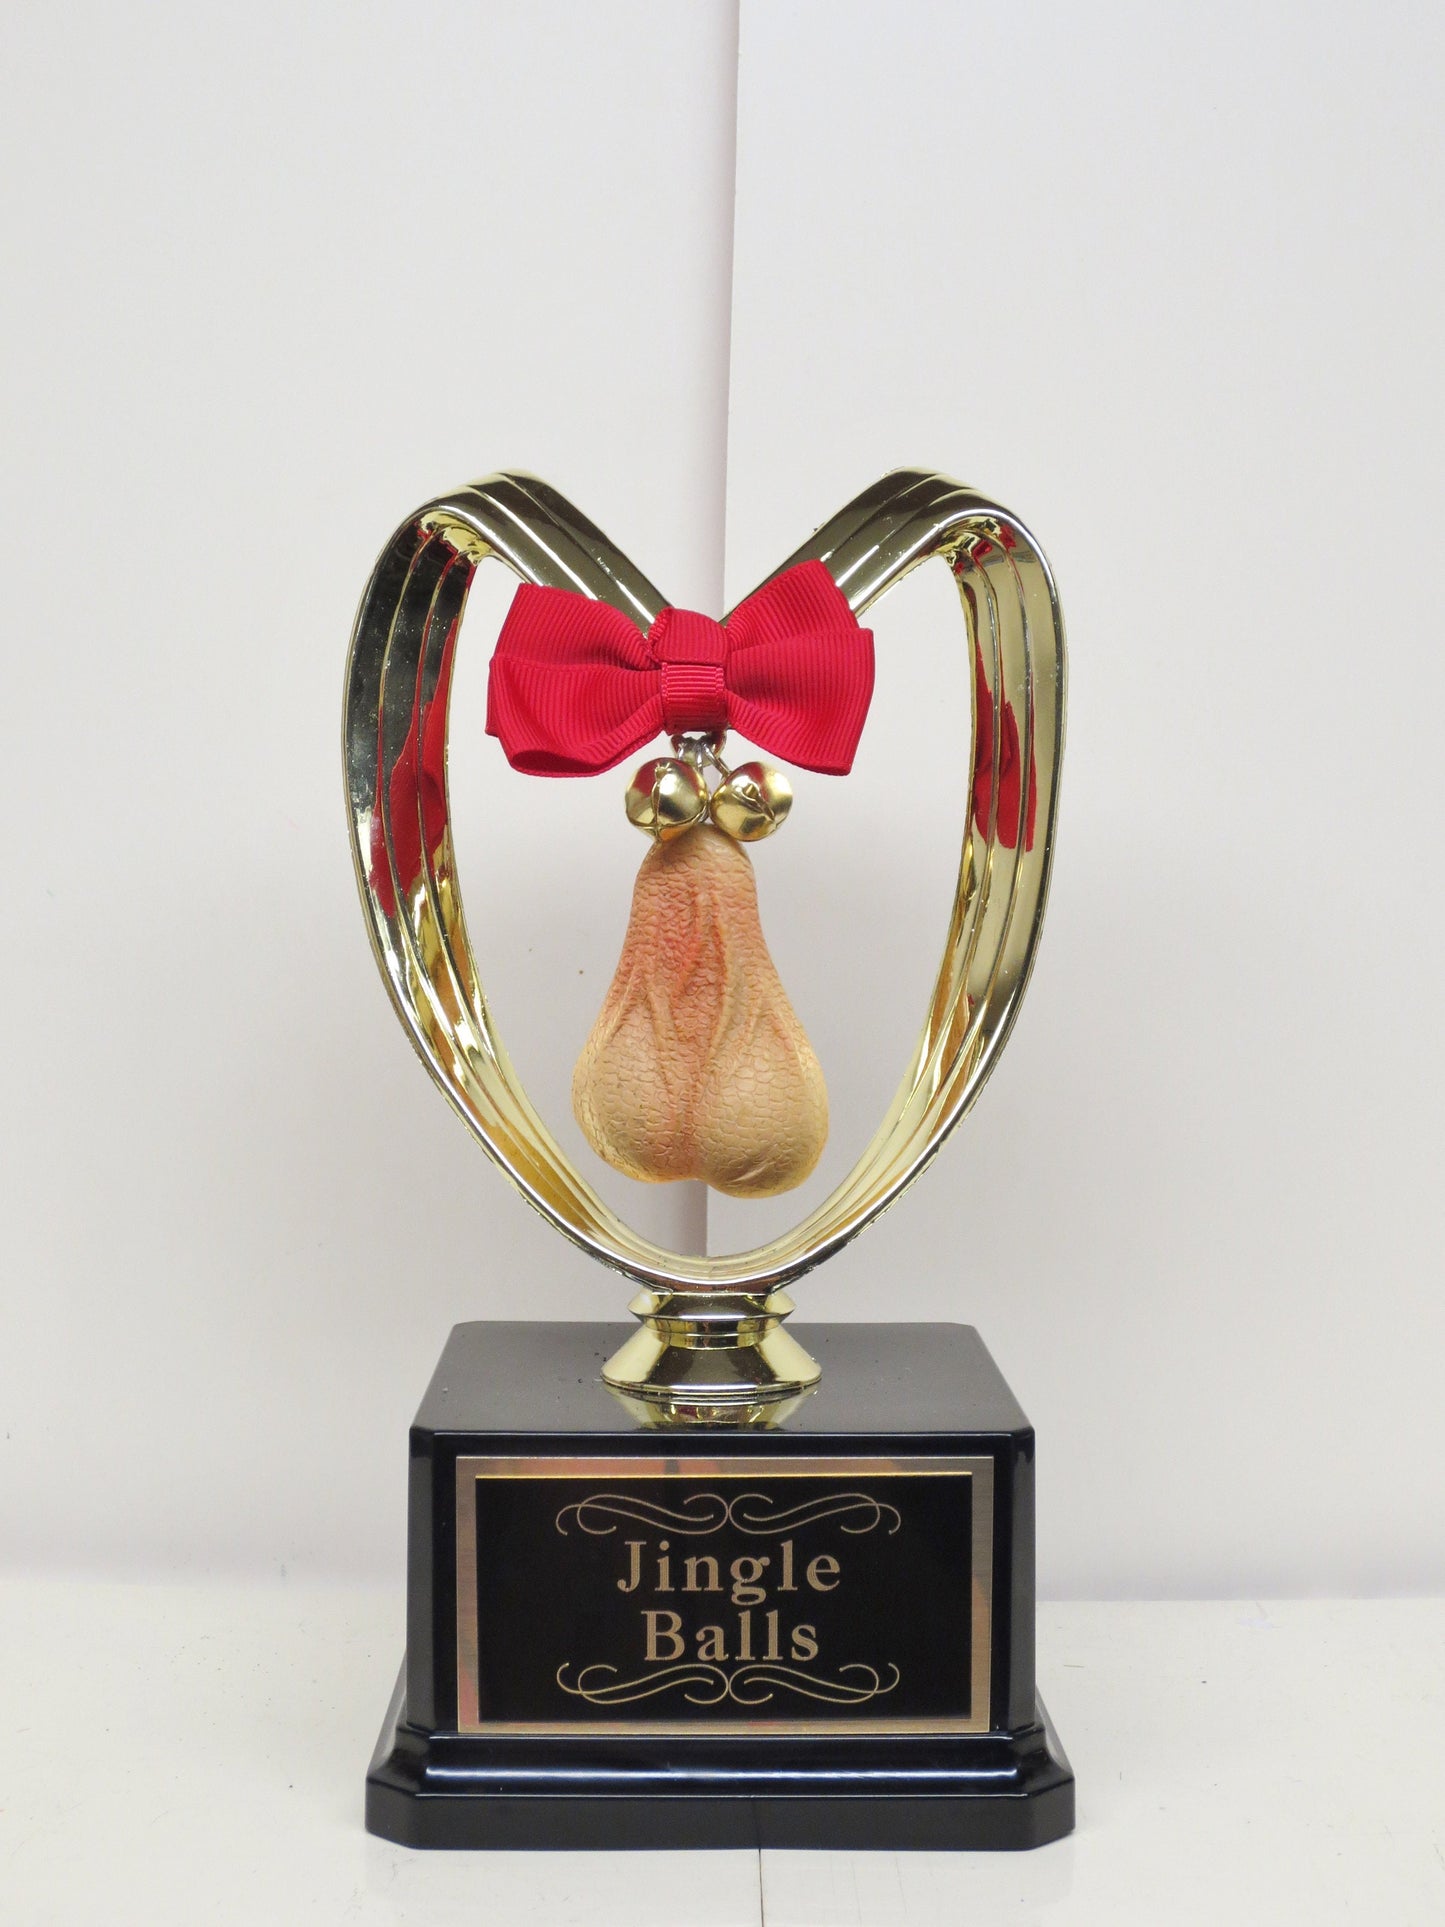 Jingle Balls Ugliest Ugly Sweater Trophy Funny Christmas Gag Gift Aww Nuts! Award Adult Humor Secret Santa Penis Testicle Holiday Decor